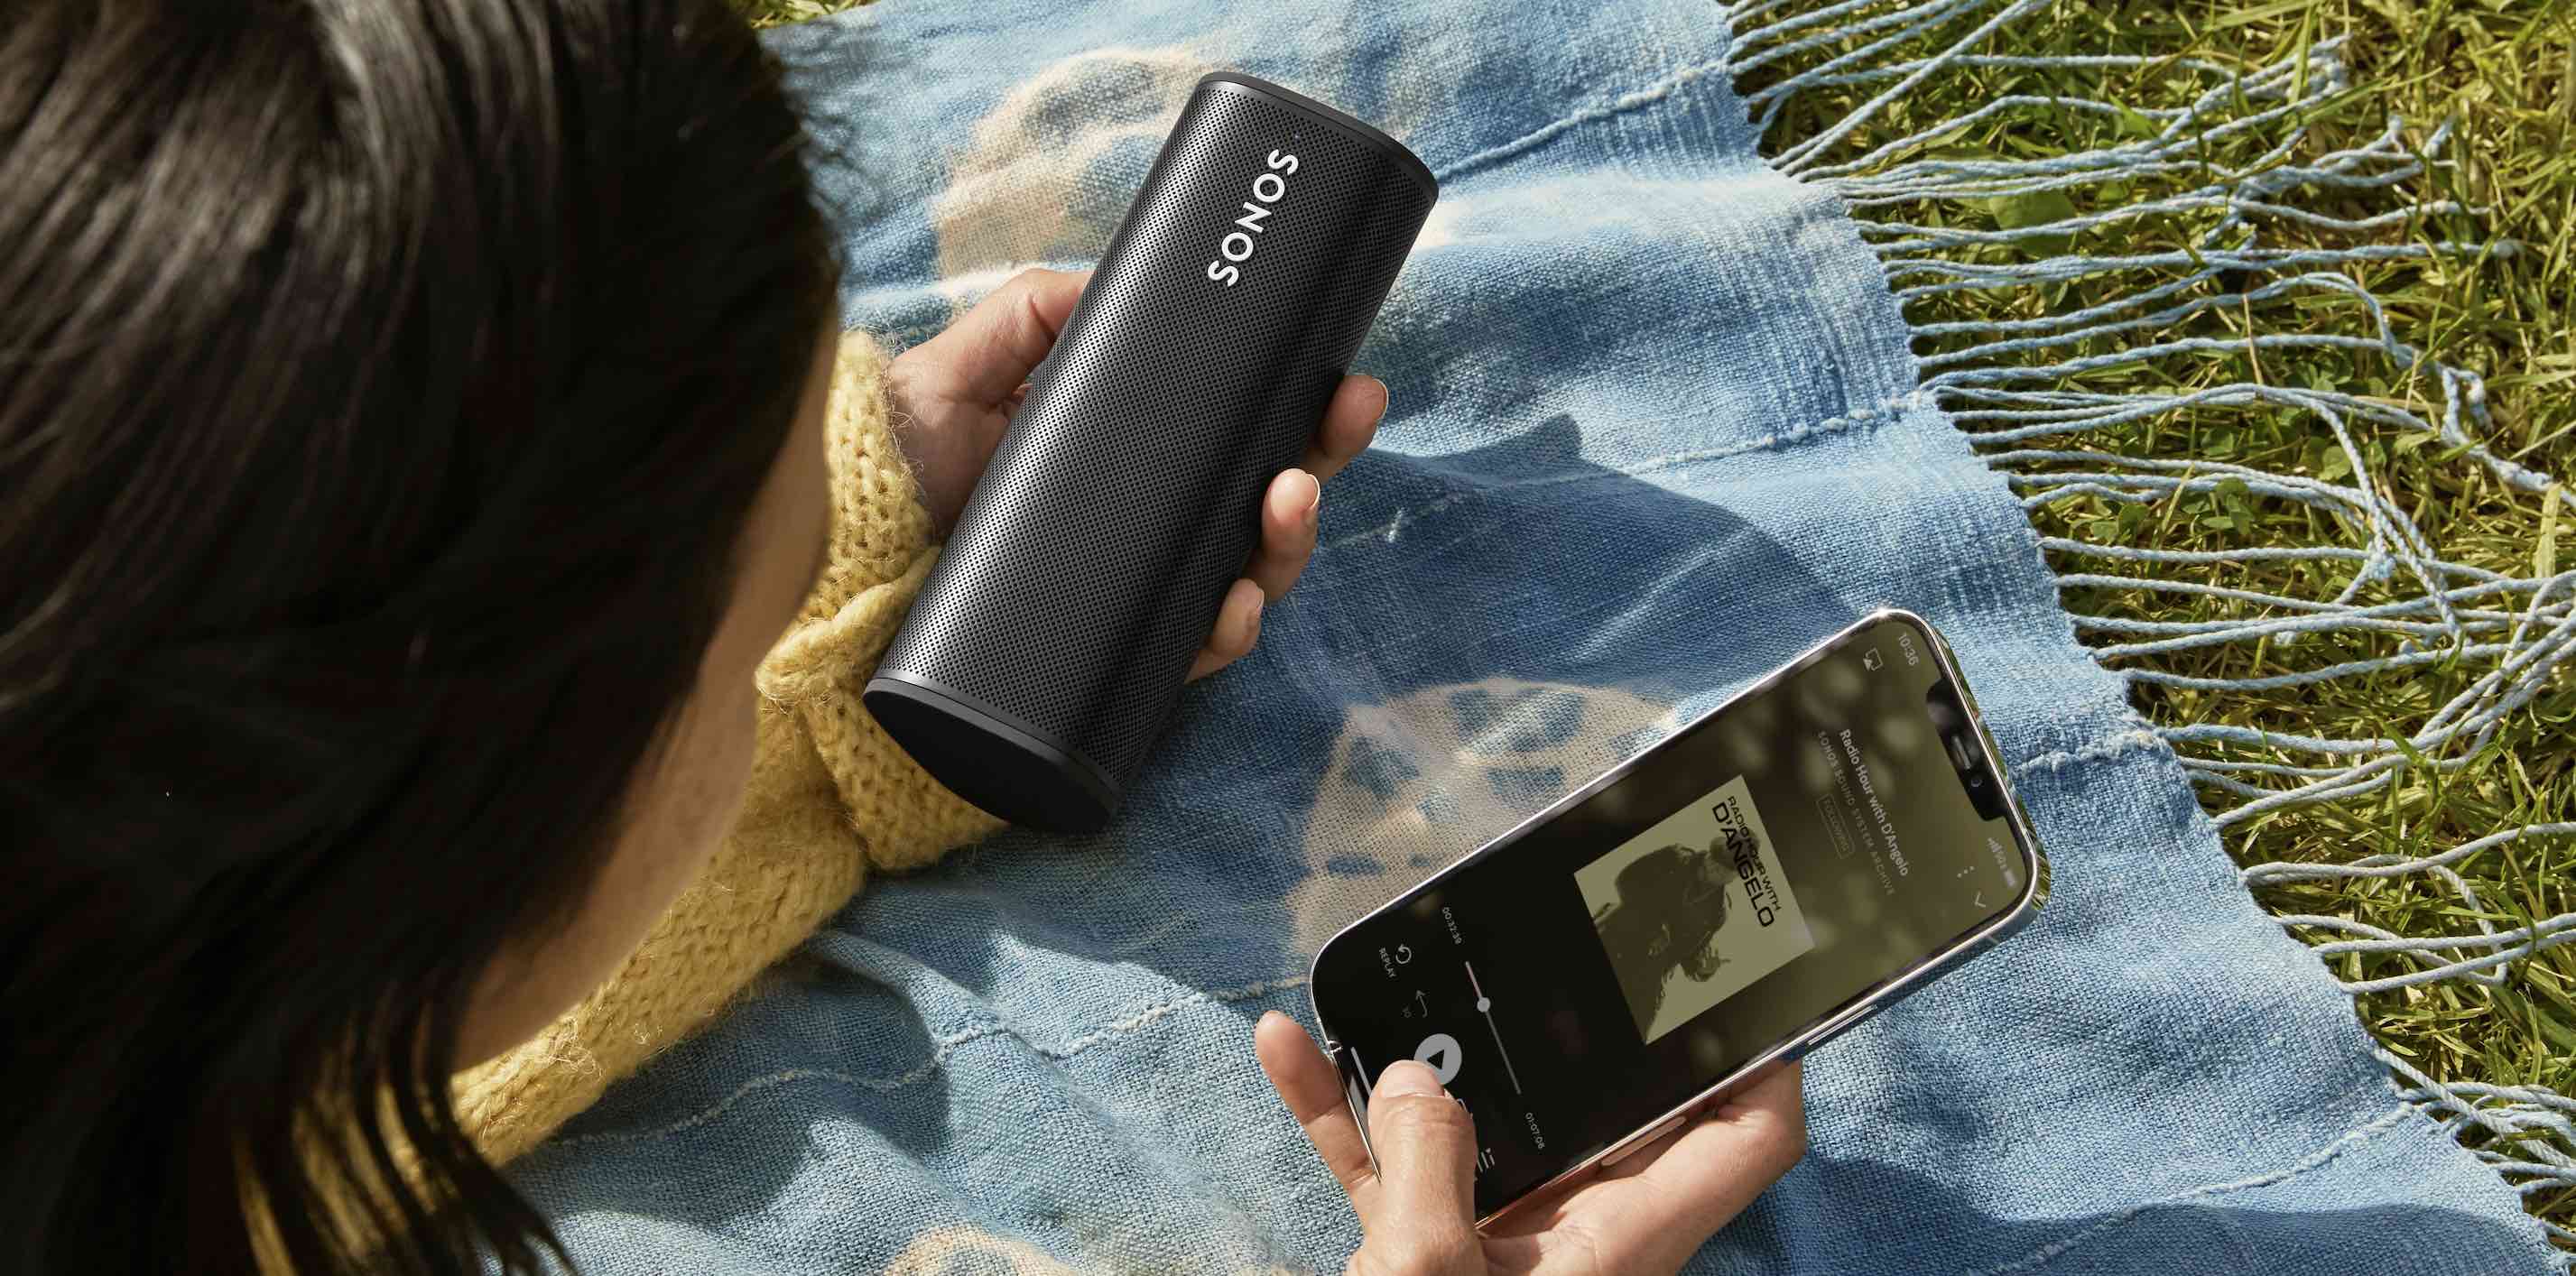 dynasti indelukke Blinke New Sonos Roam portable speaker unveiled w/ AirPlay 2 - 9to5Mac